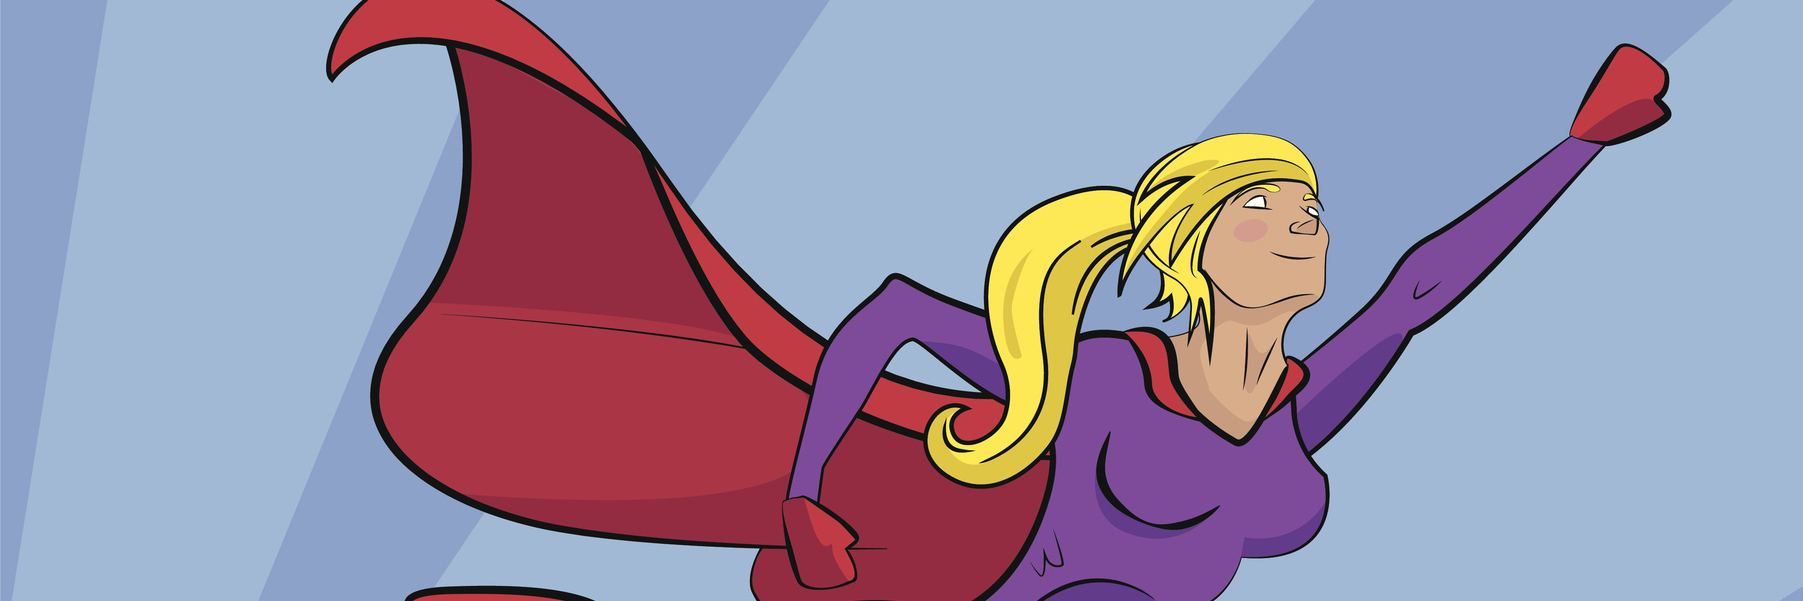 drawing of female superhero